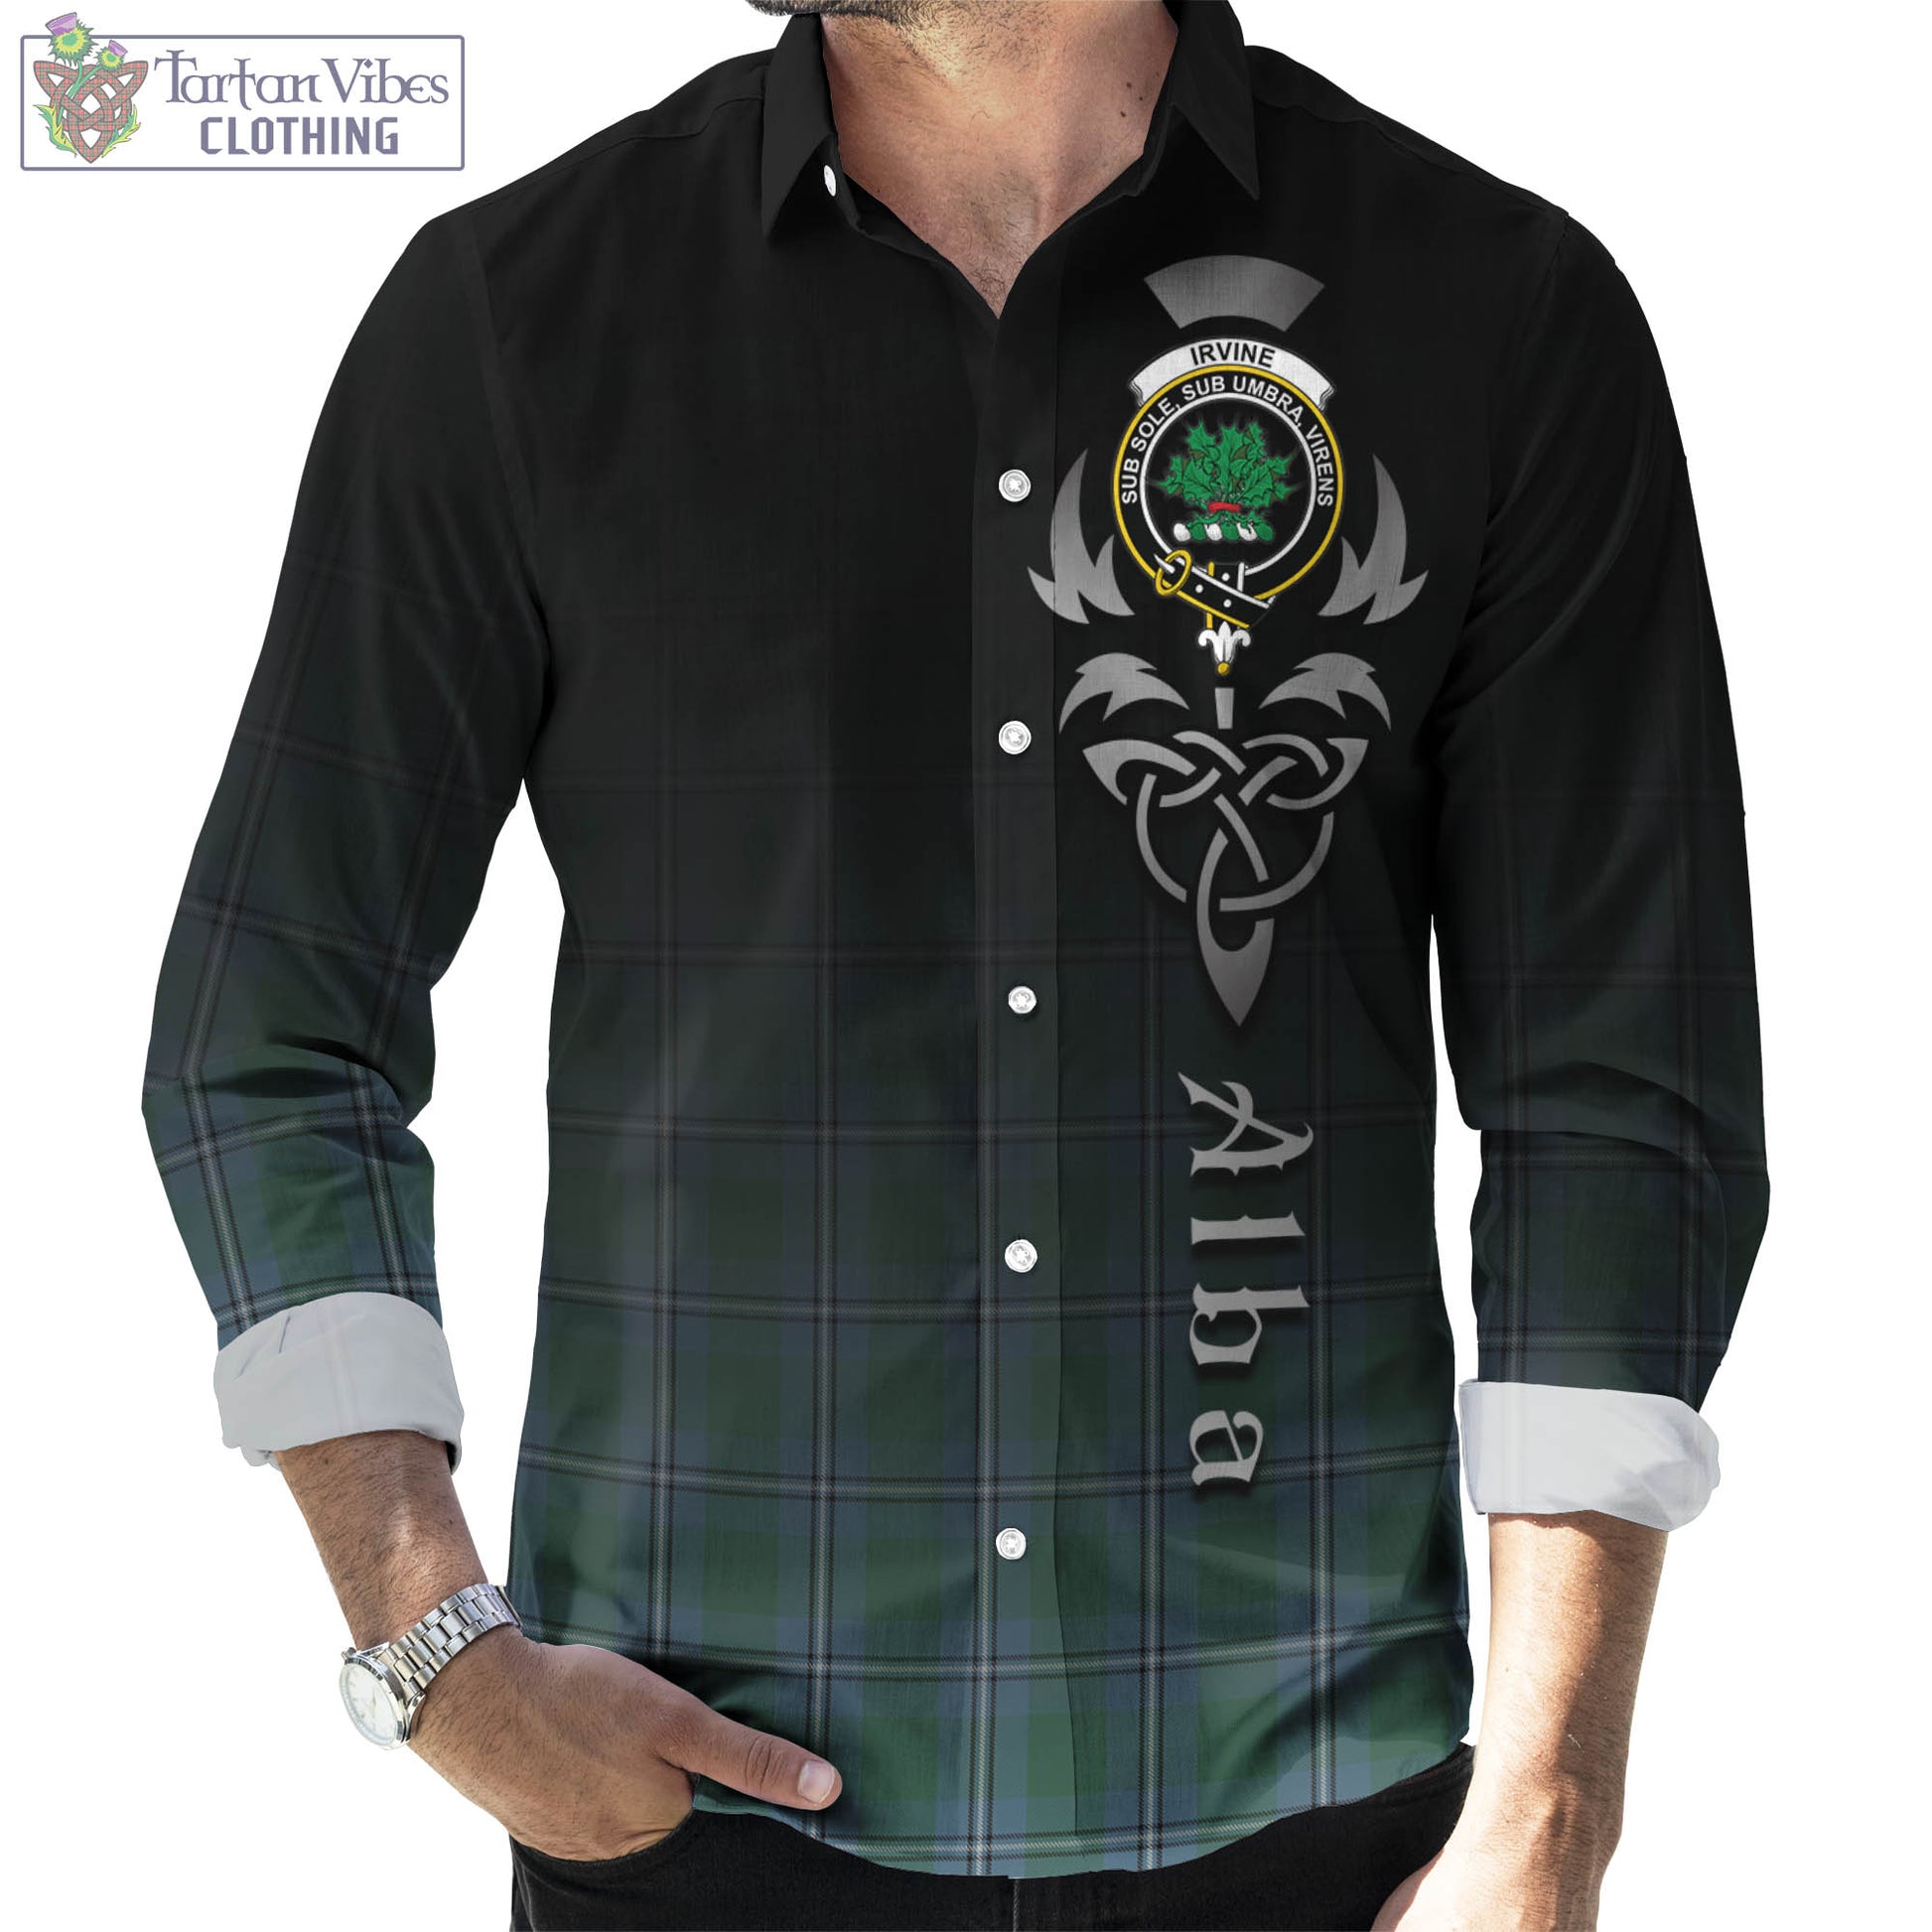 Tartan Vibes Clothing Irvine of Drum Tartan Long Sleeve Button Up Featuring Alba Gu Brath Family Crest Celtic Inspired